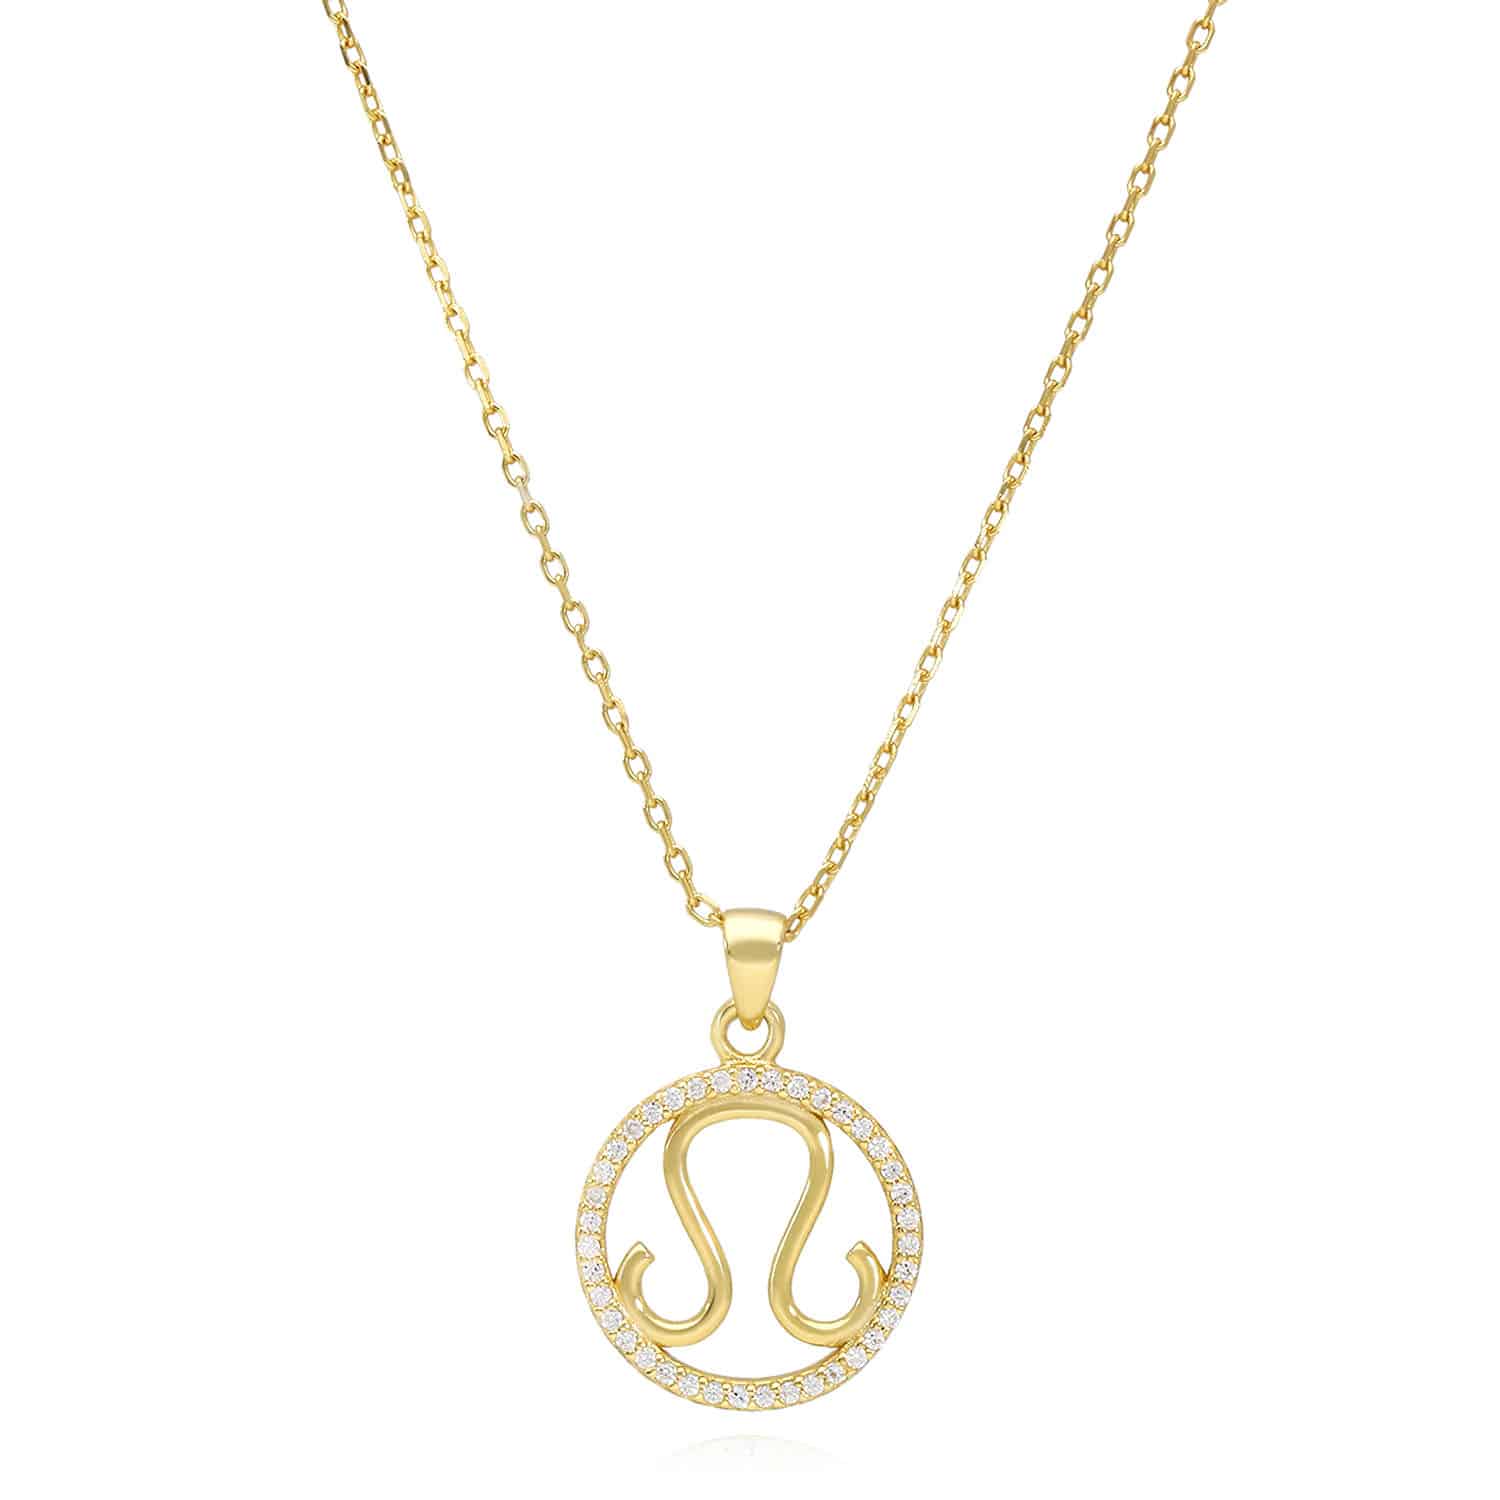 18K Gold Over Silver Simulated Diamond Zodiac Charm Pendant Necklace 16"-18" Adj - Leo